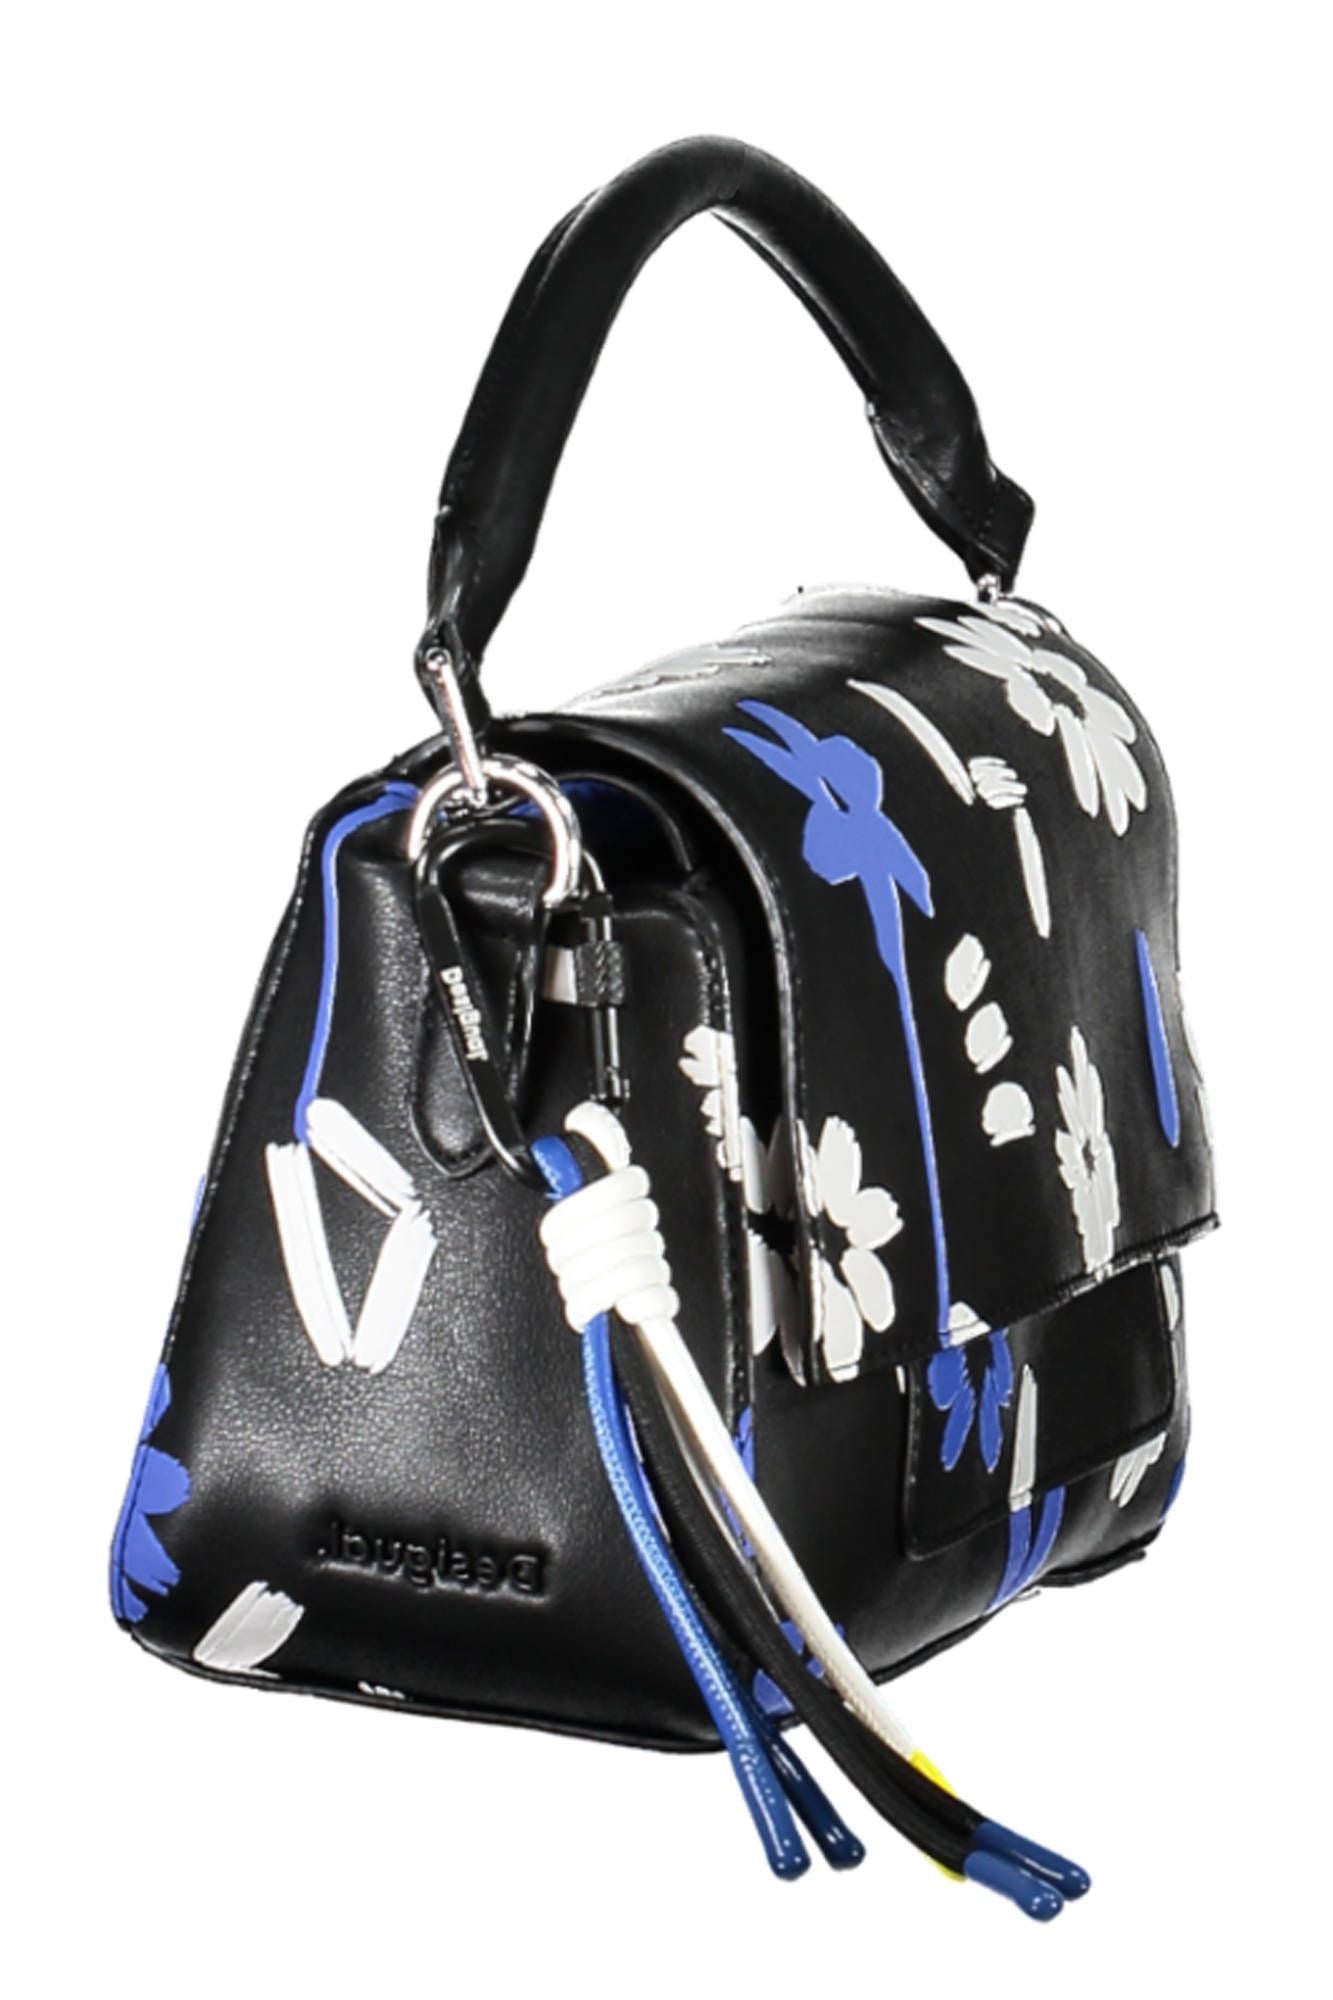 Desigual Chic Black Polyurethane Handbag with Contrasting Details